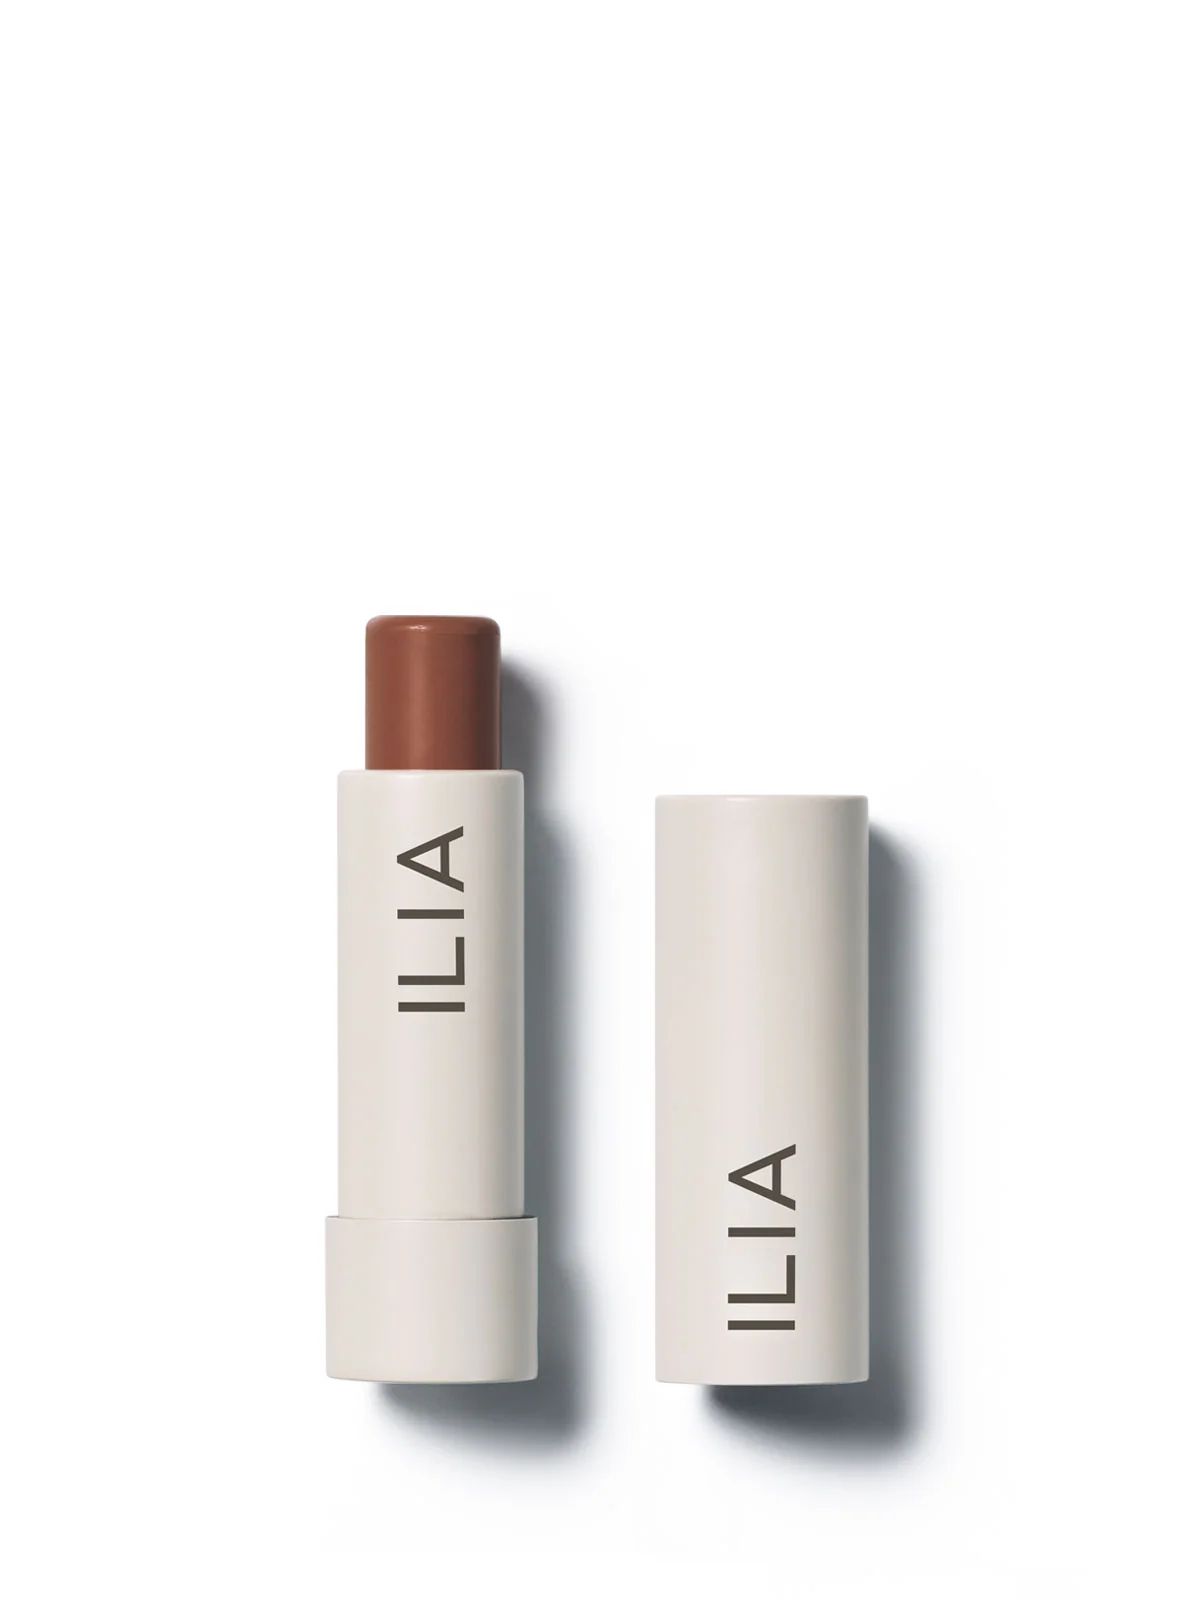 ILIA Balmy Tint: Neutral Cocoa Brown - Hydrating Lip Balm | ILIA Beauty